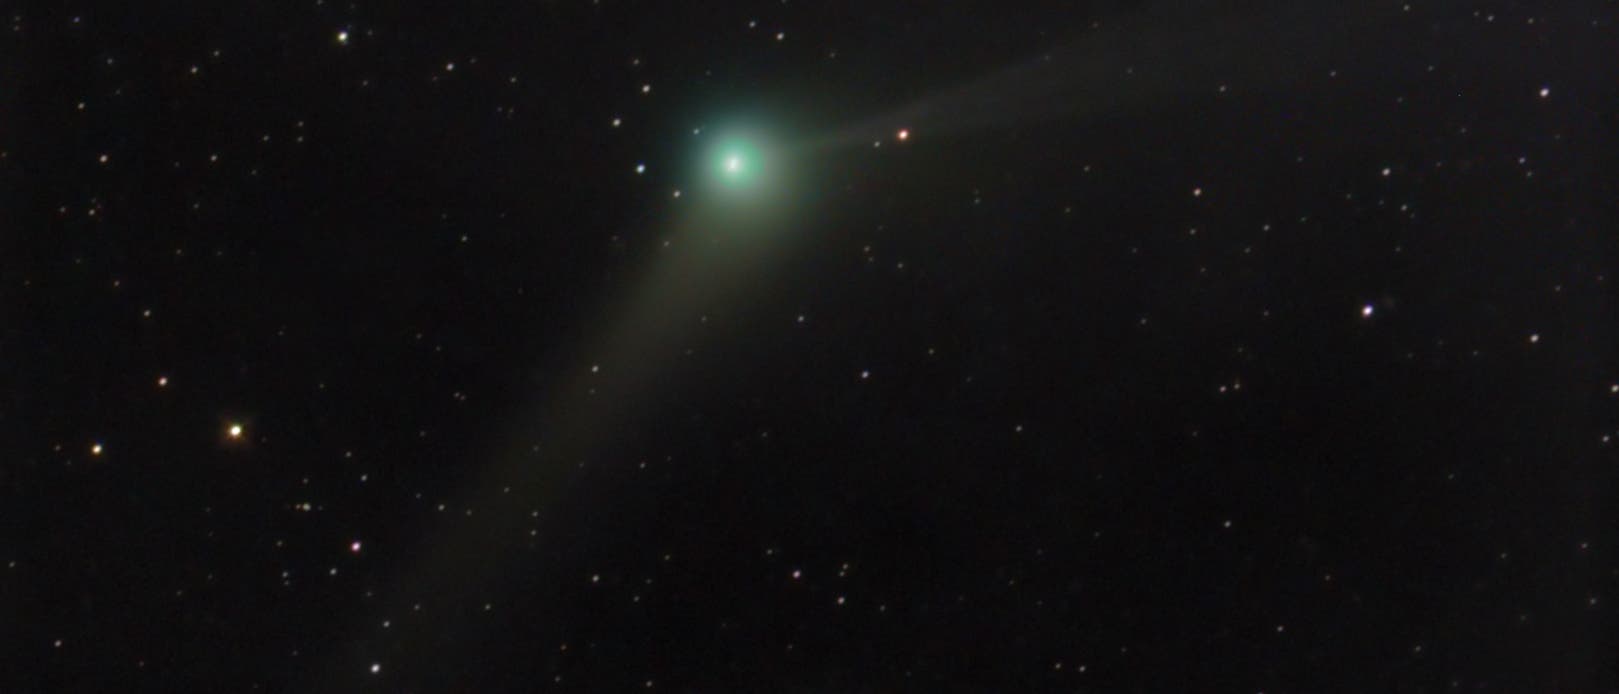 Komet C/2013 US10 Catalina am 7. Dezember 2015